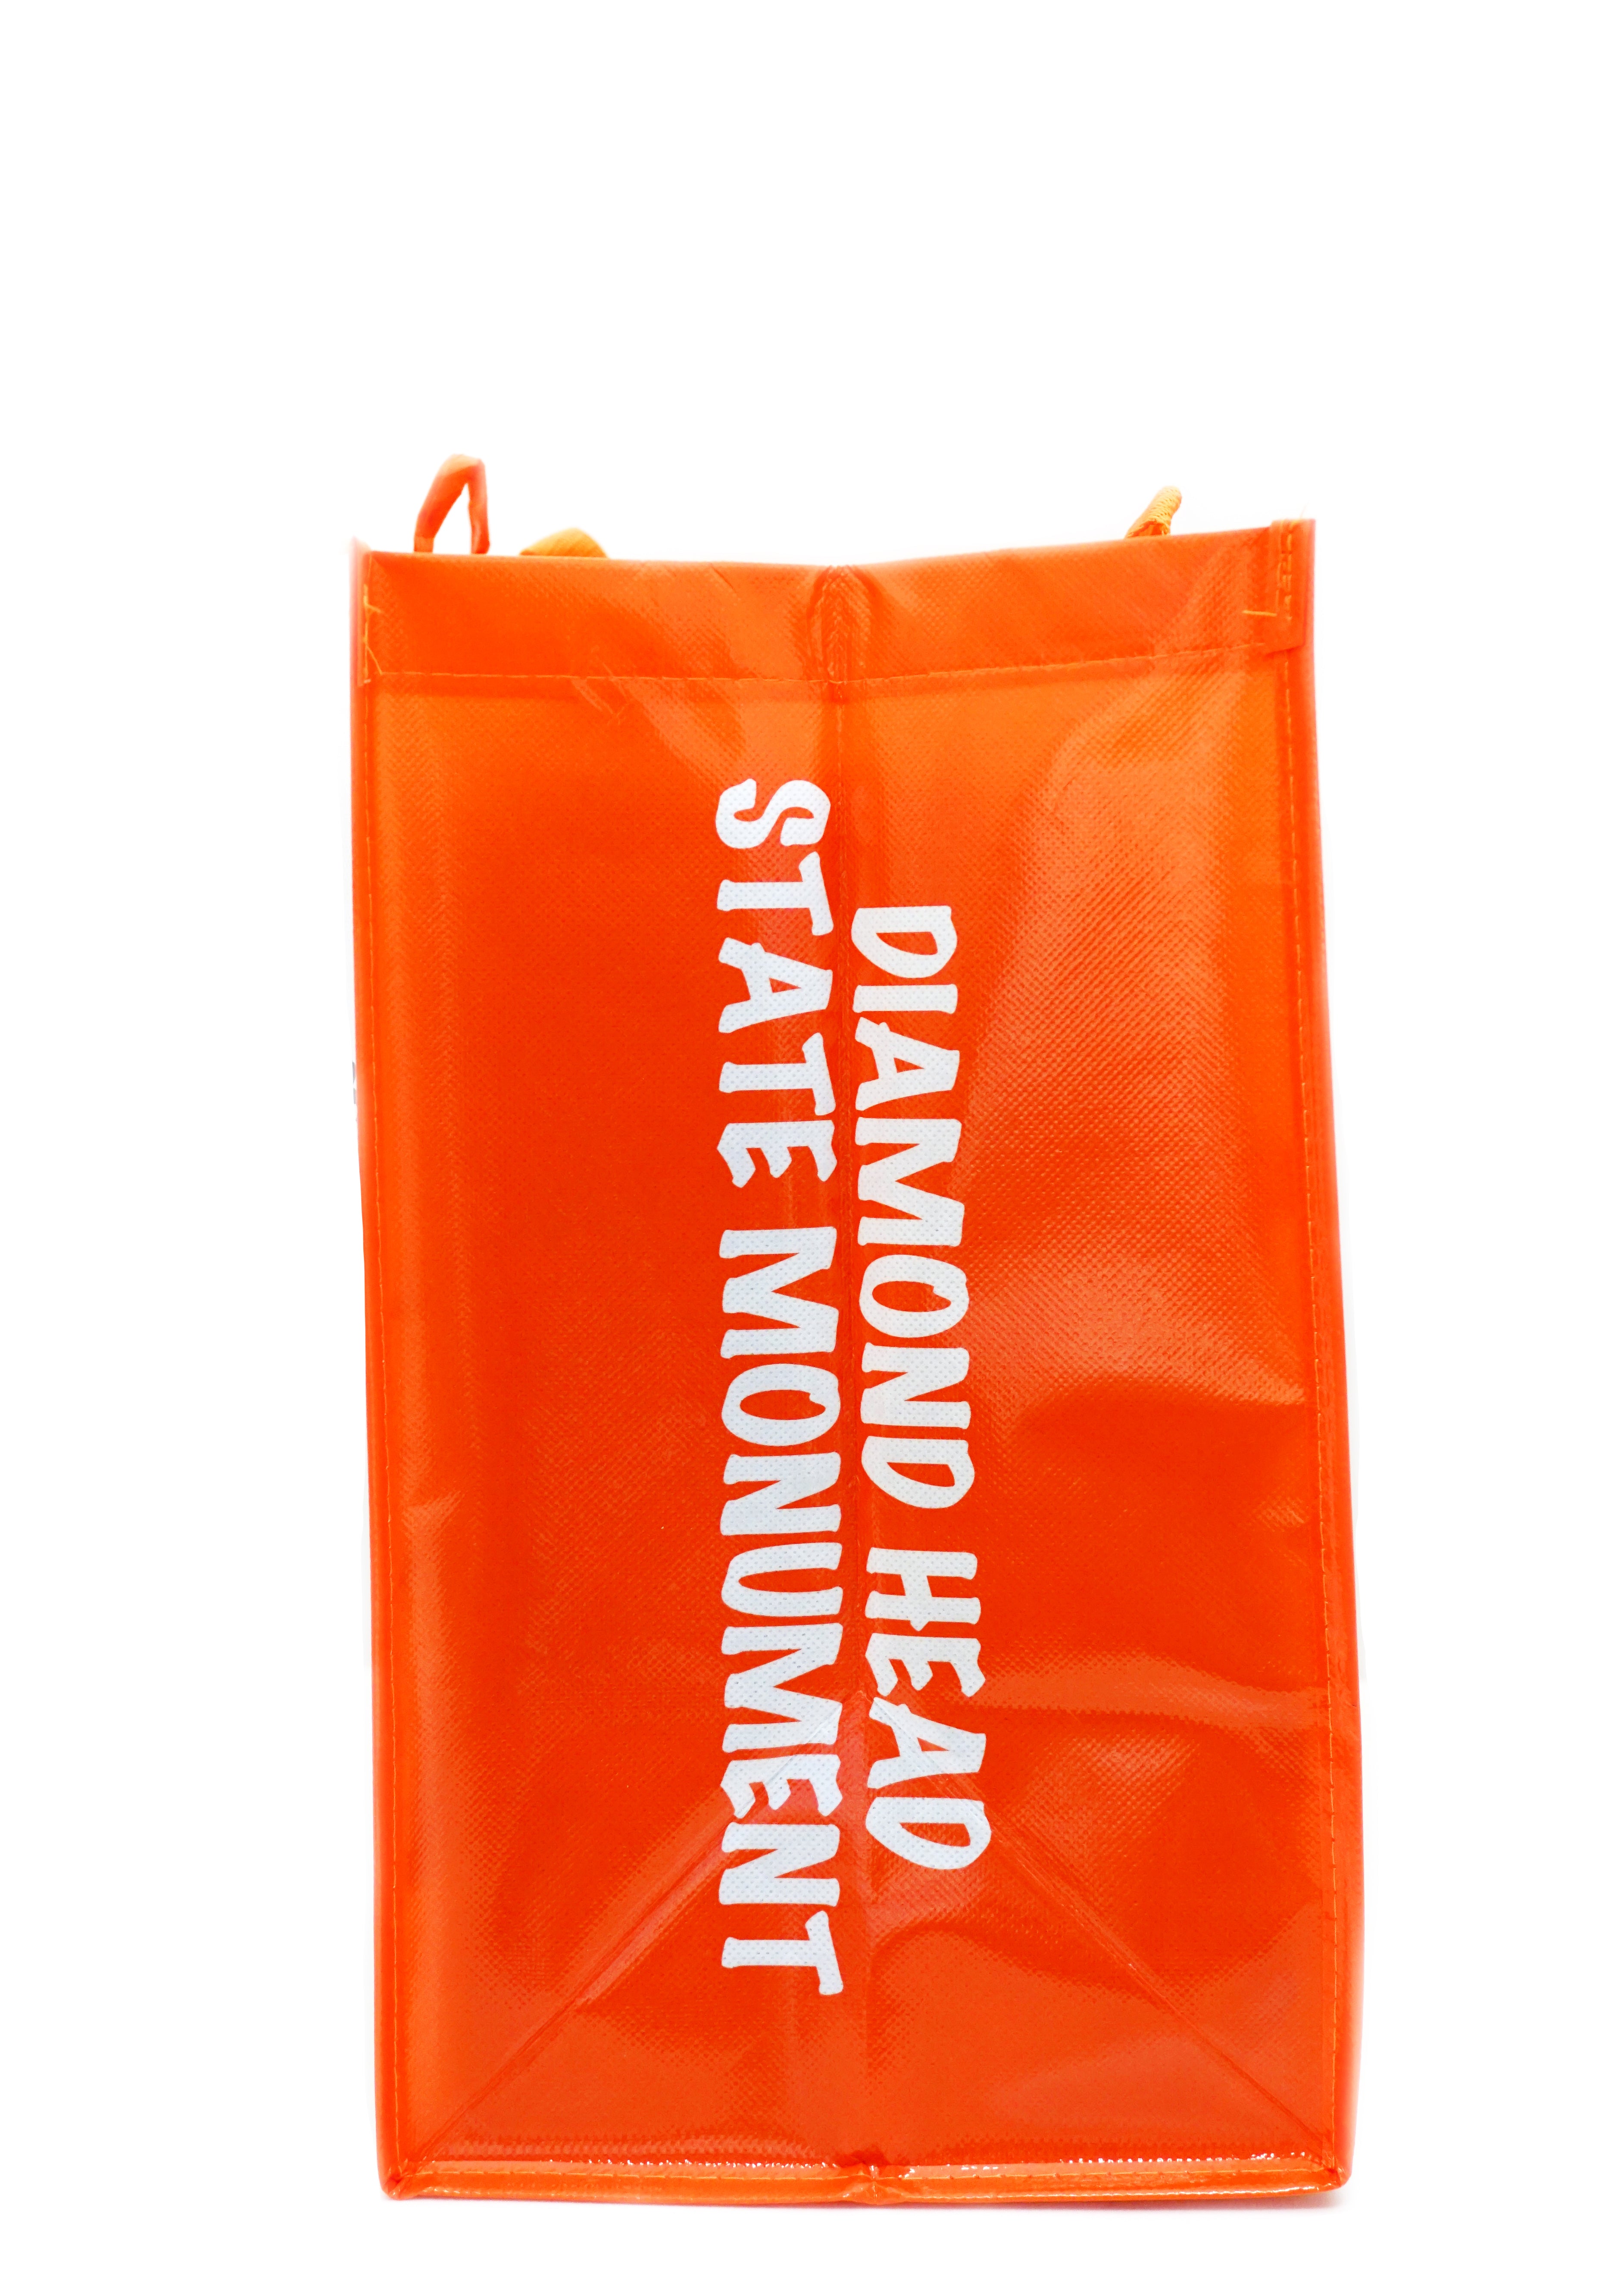 Orange Diamond Design Woven Tote Summer Bag